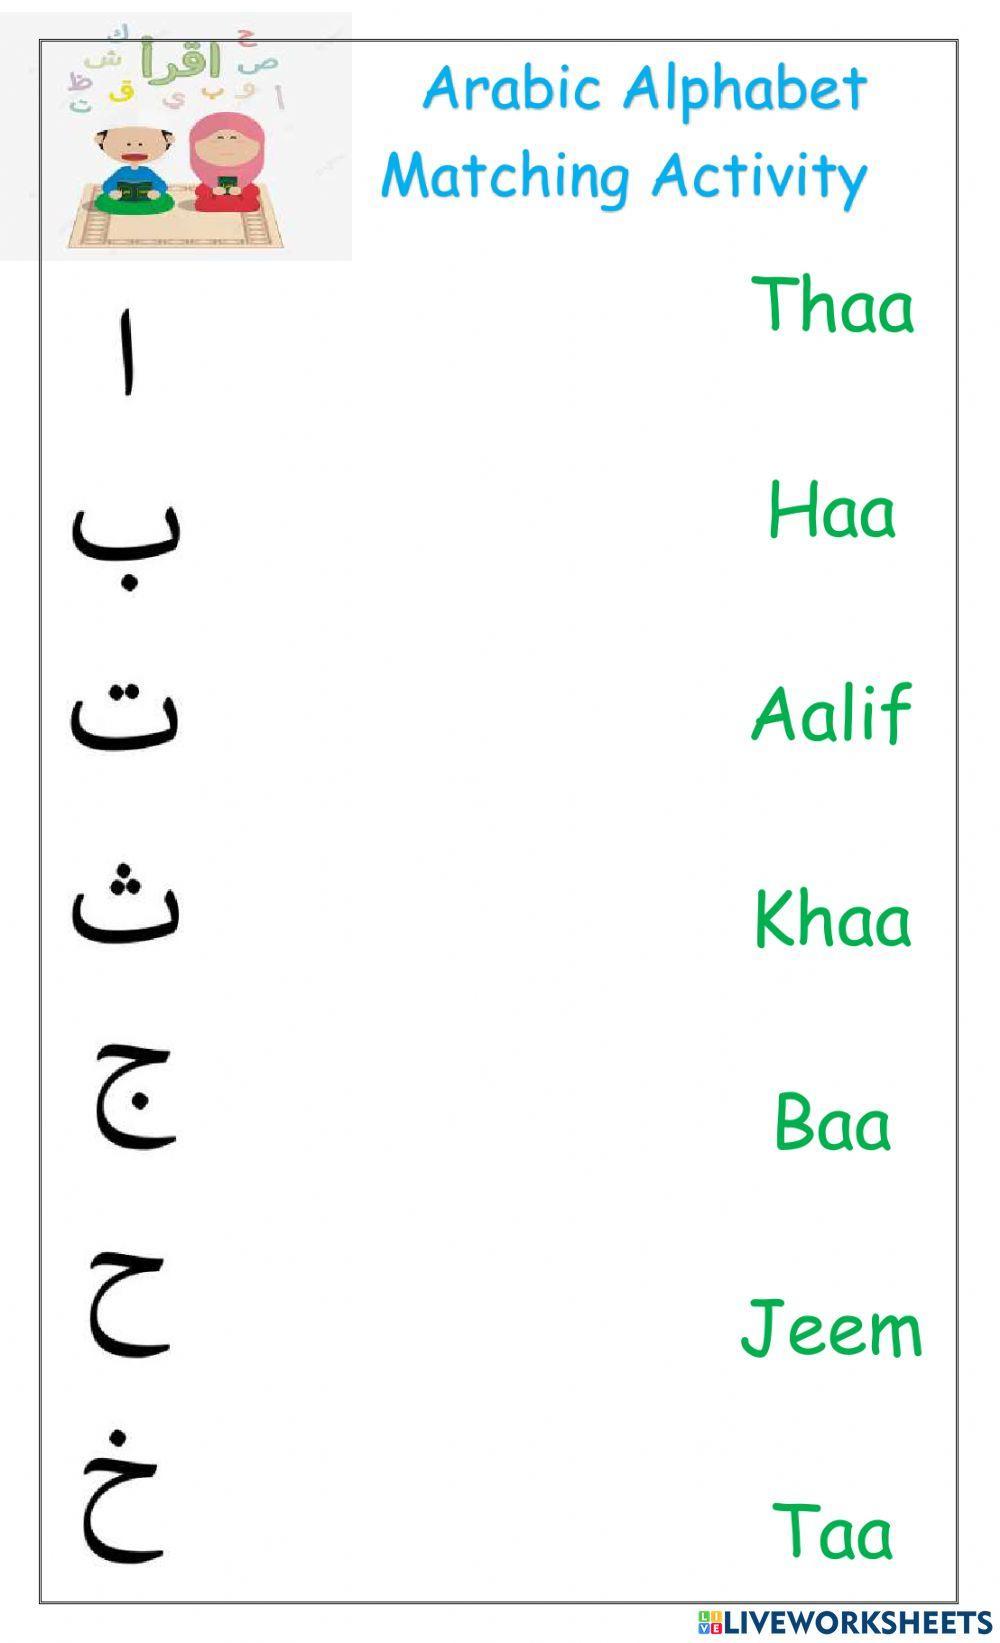 Arabic Alphabet - Part 1